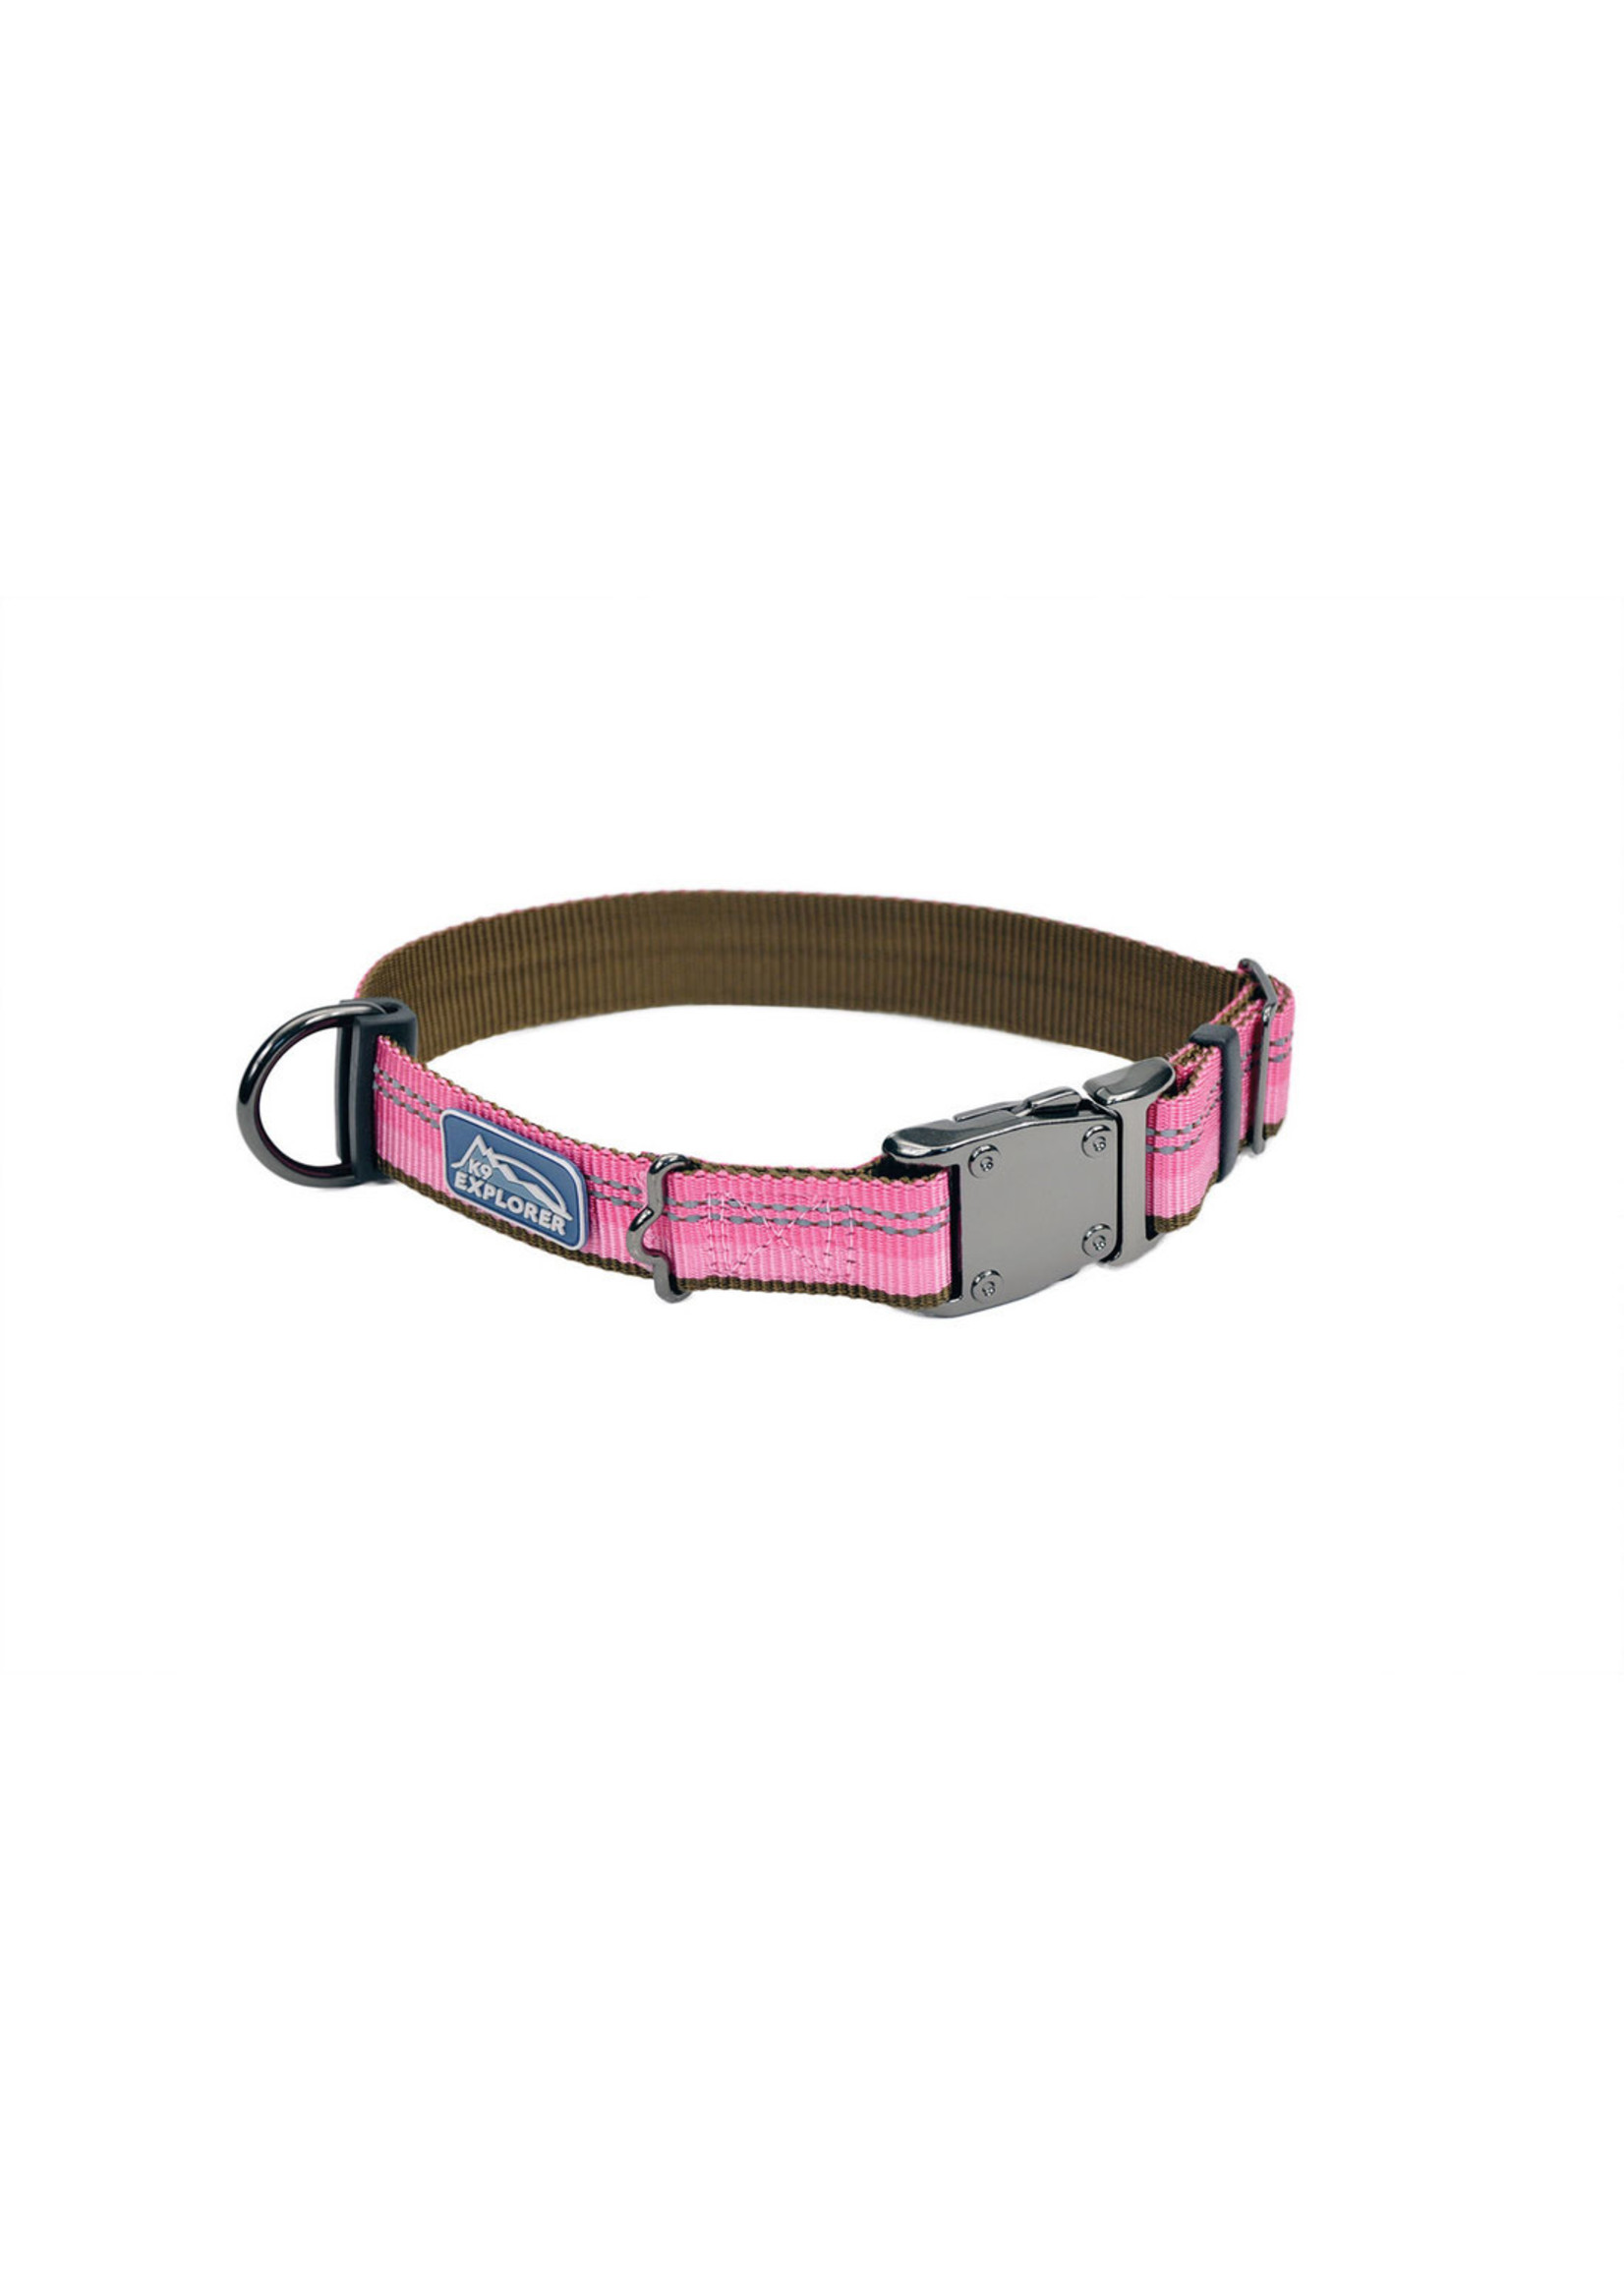 Coastal K9 Explorer® Reflective Adjustable Dog Collar, Rosebud, 5/8" x 10"-14" Small